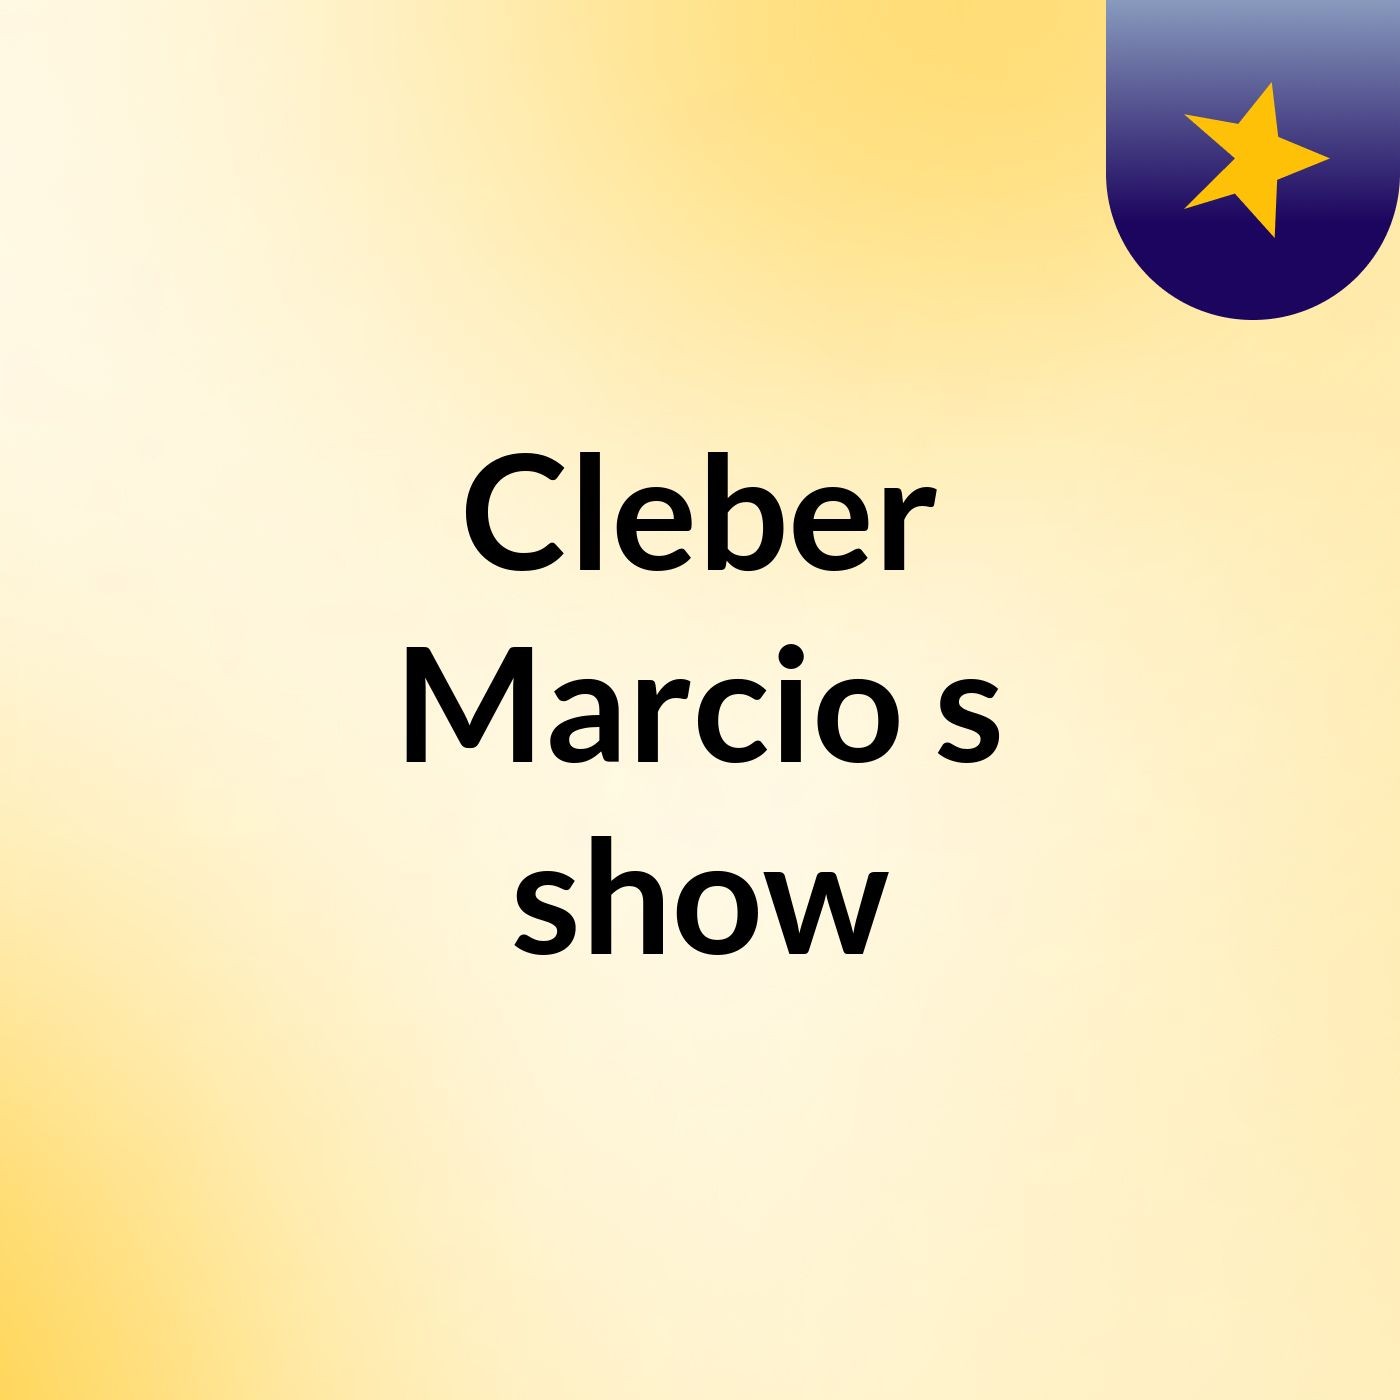 Cleber Marcio's show